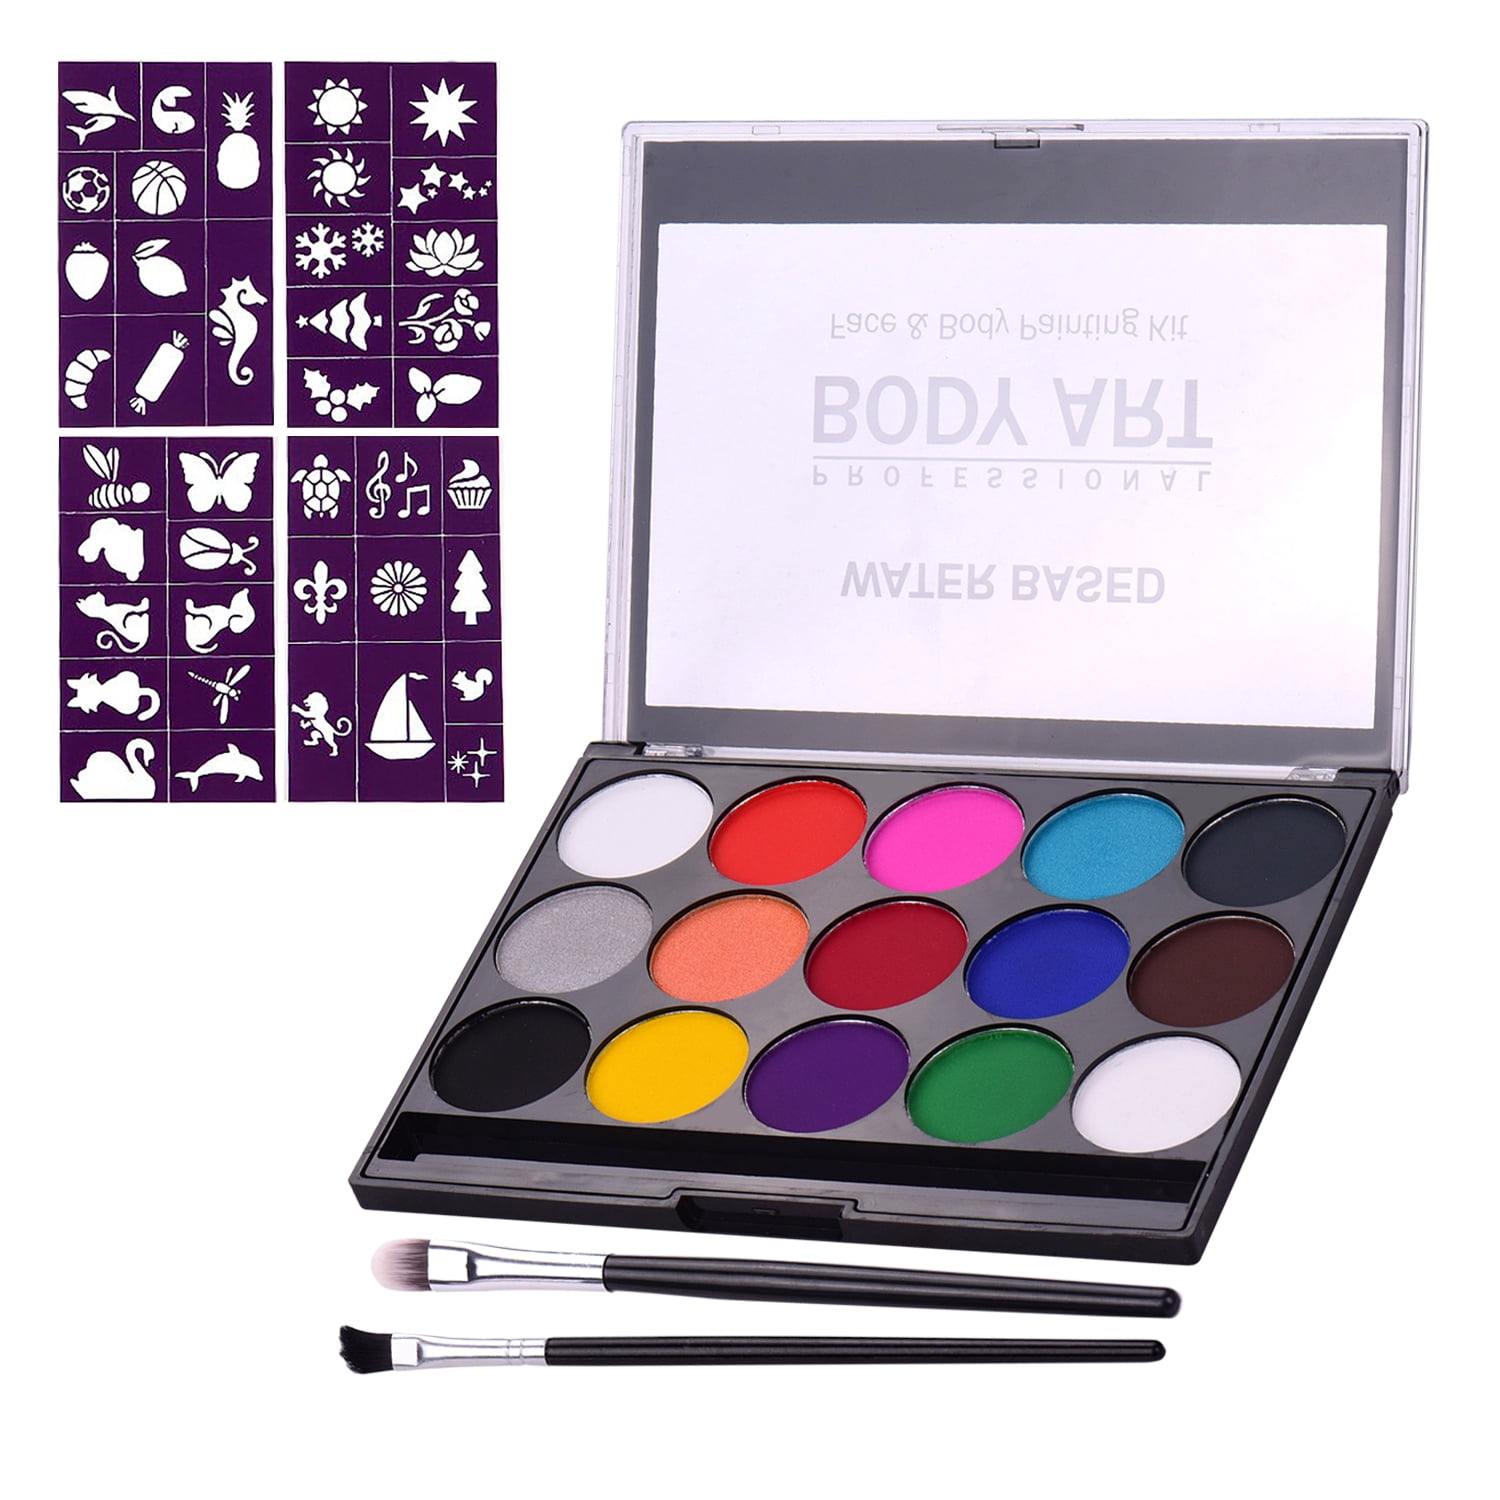 16 Colors Professional Halloween Face Paint Kit Palette Art Makeup Painting USA 